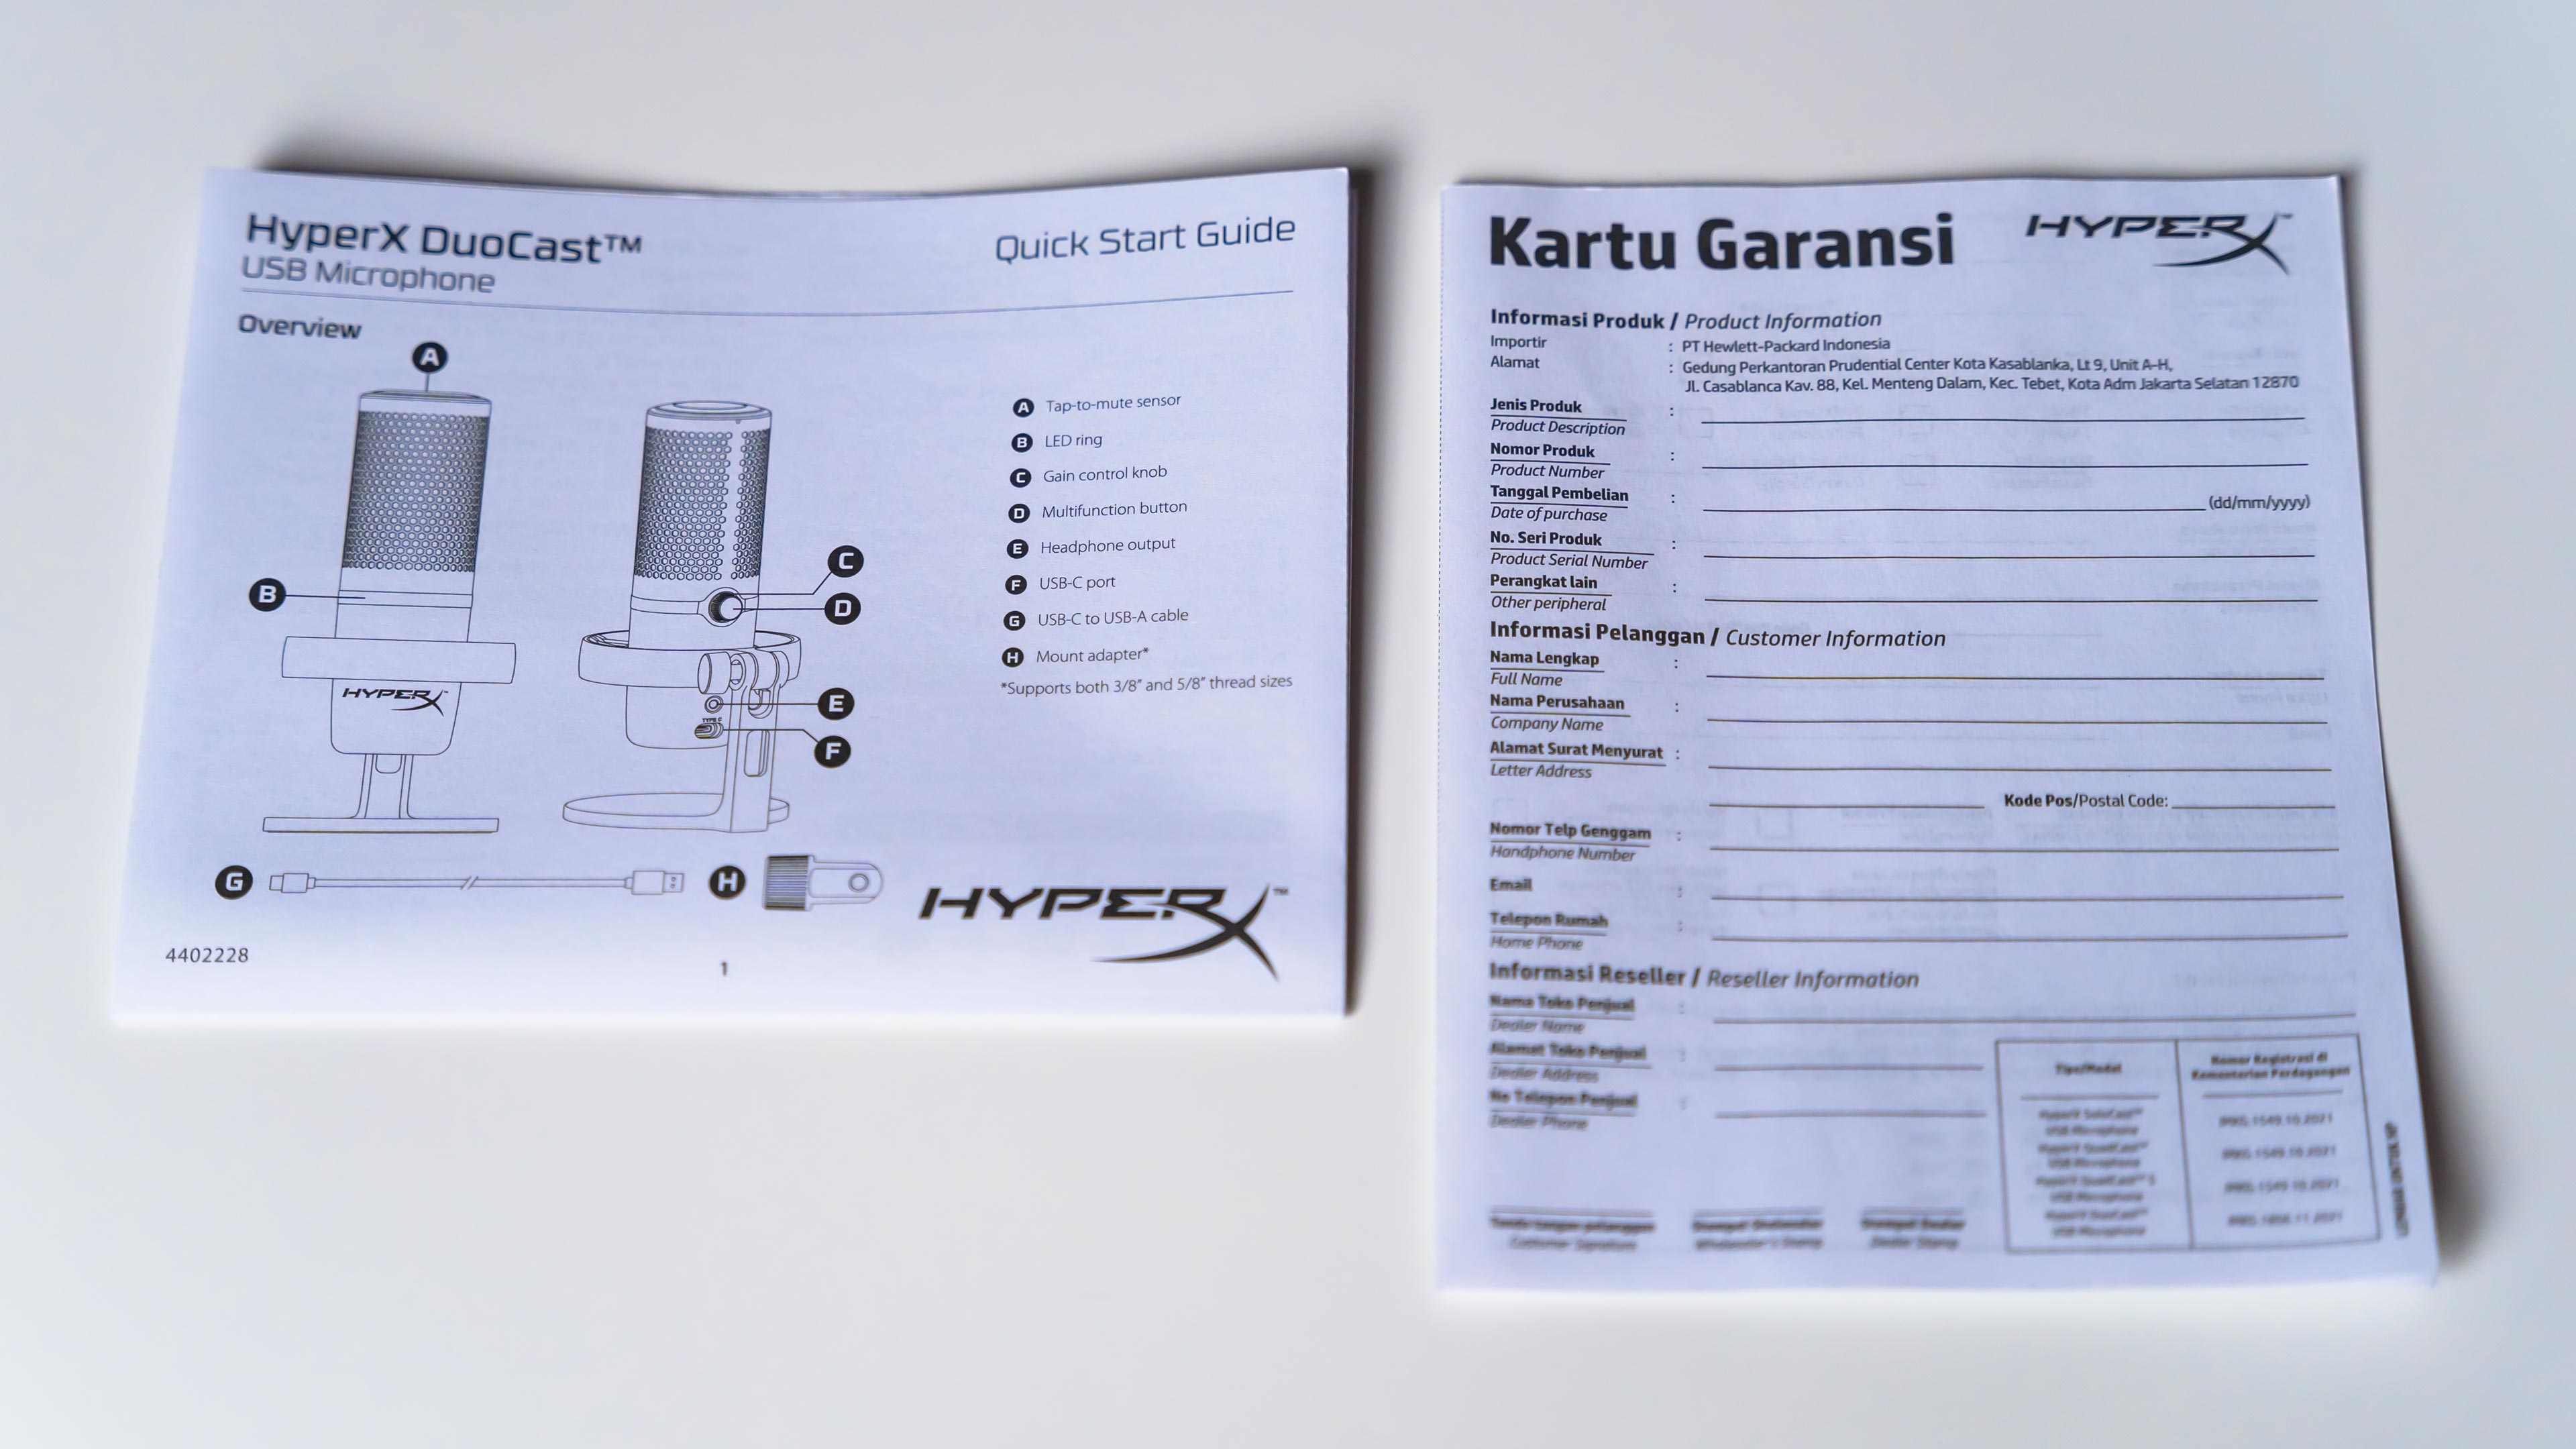 HyperX DuoCast Box (10)